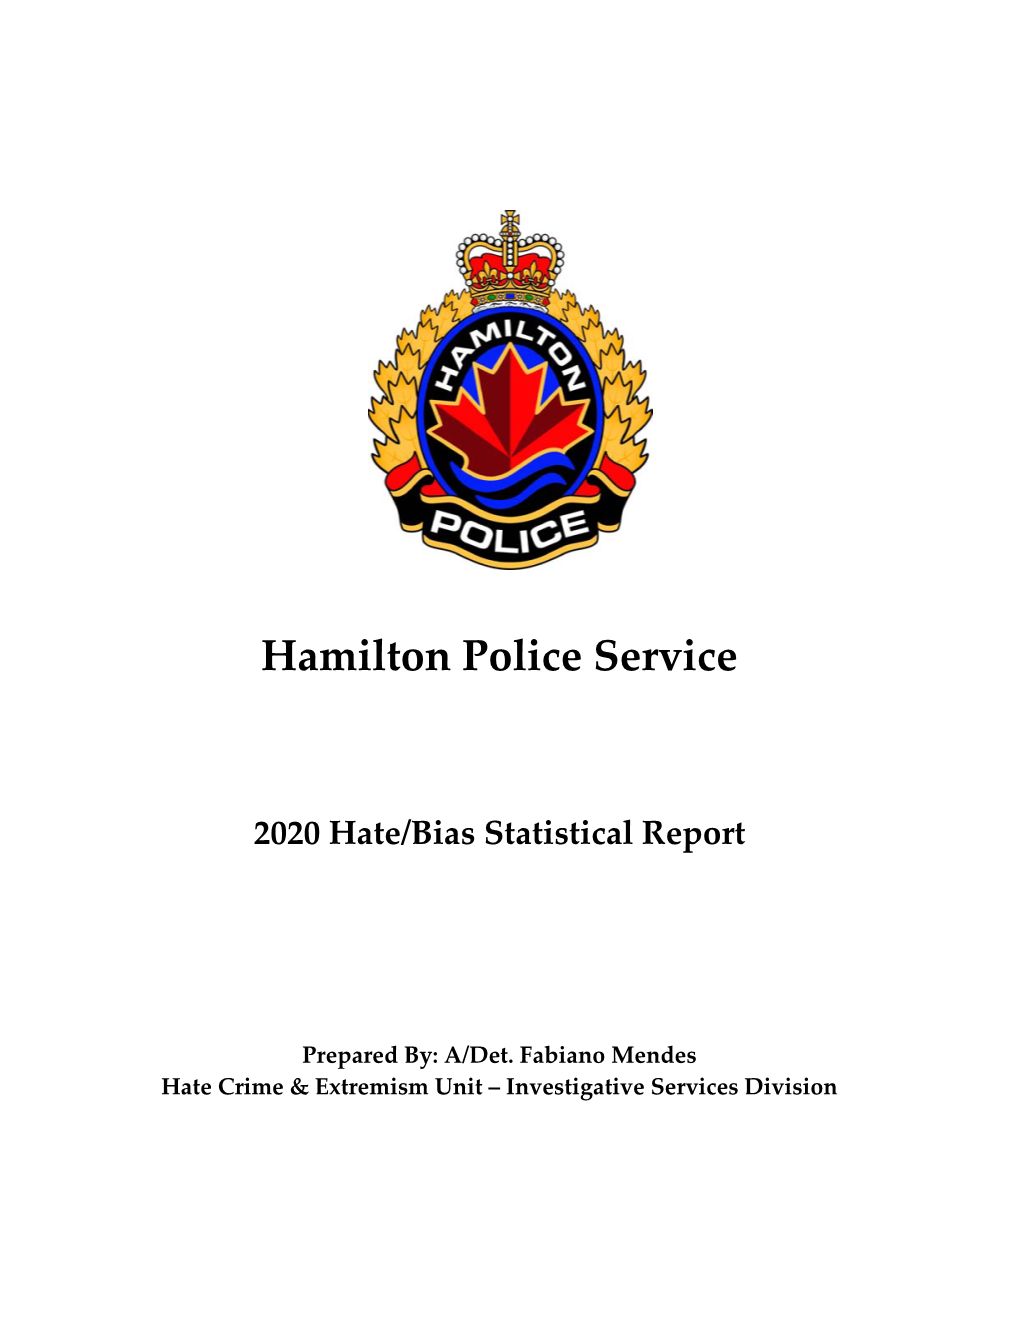 Hamilton Police Service – 2013 Hate Bias Crime Statistical Report